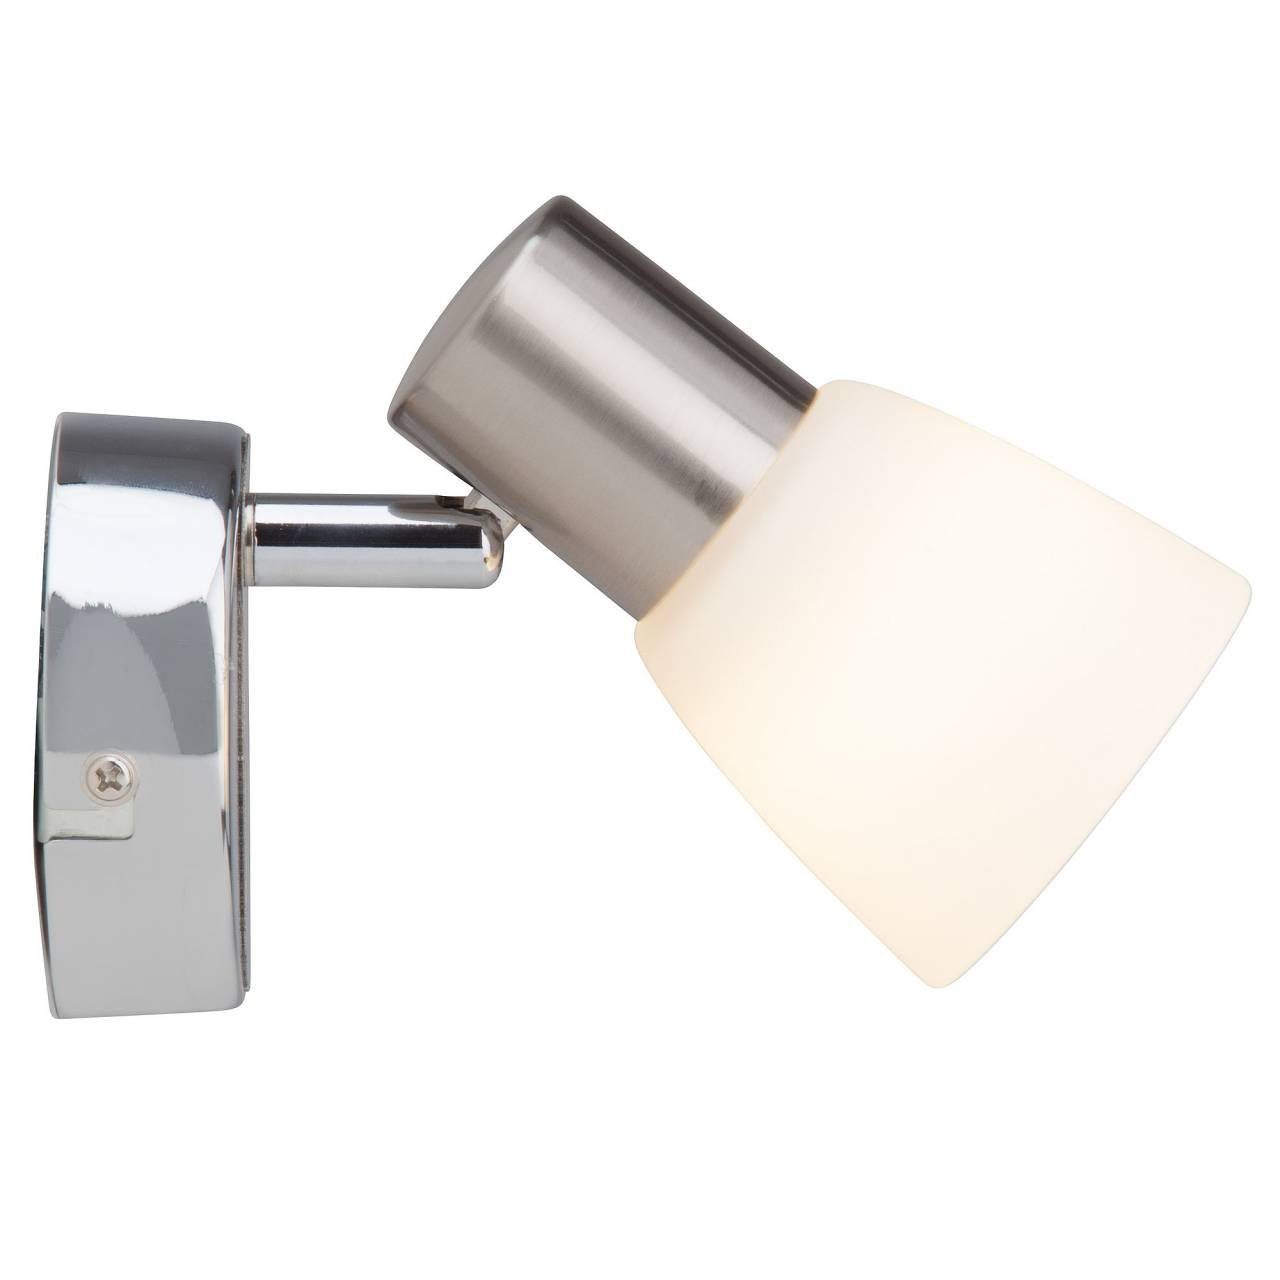 LED-Z45, E14, Lampe LED-Tr Janna, LED Wandspot Wandleuchte 4W Janna Brilliant eisen/chrom/weiß 1x